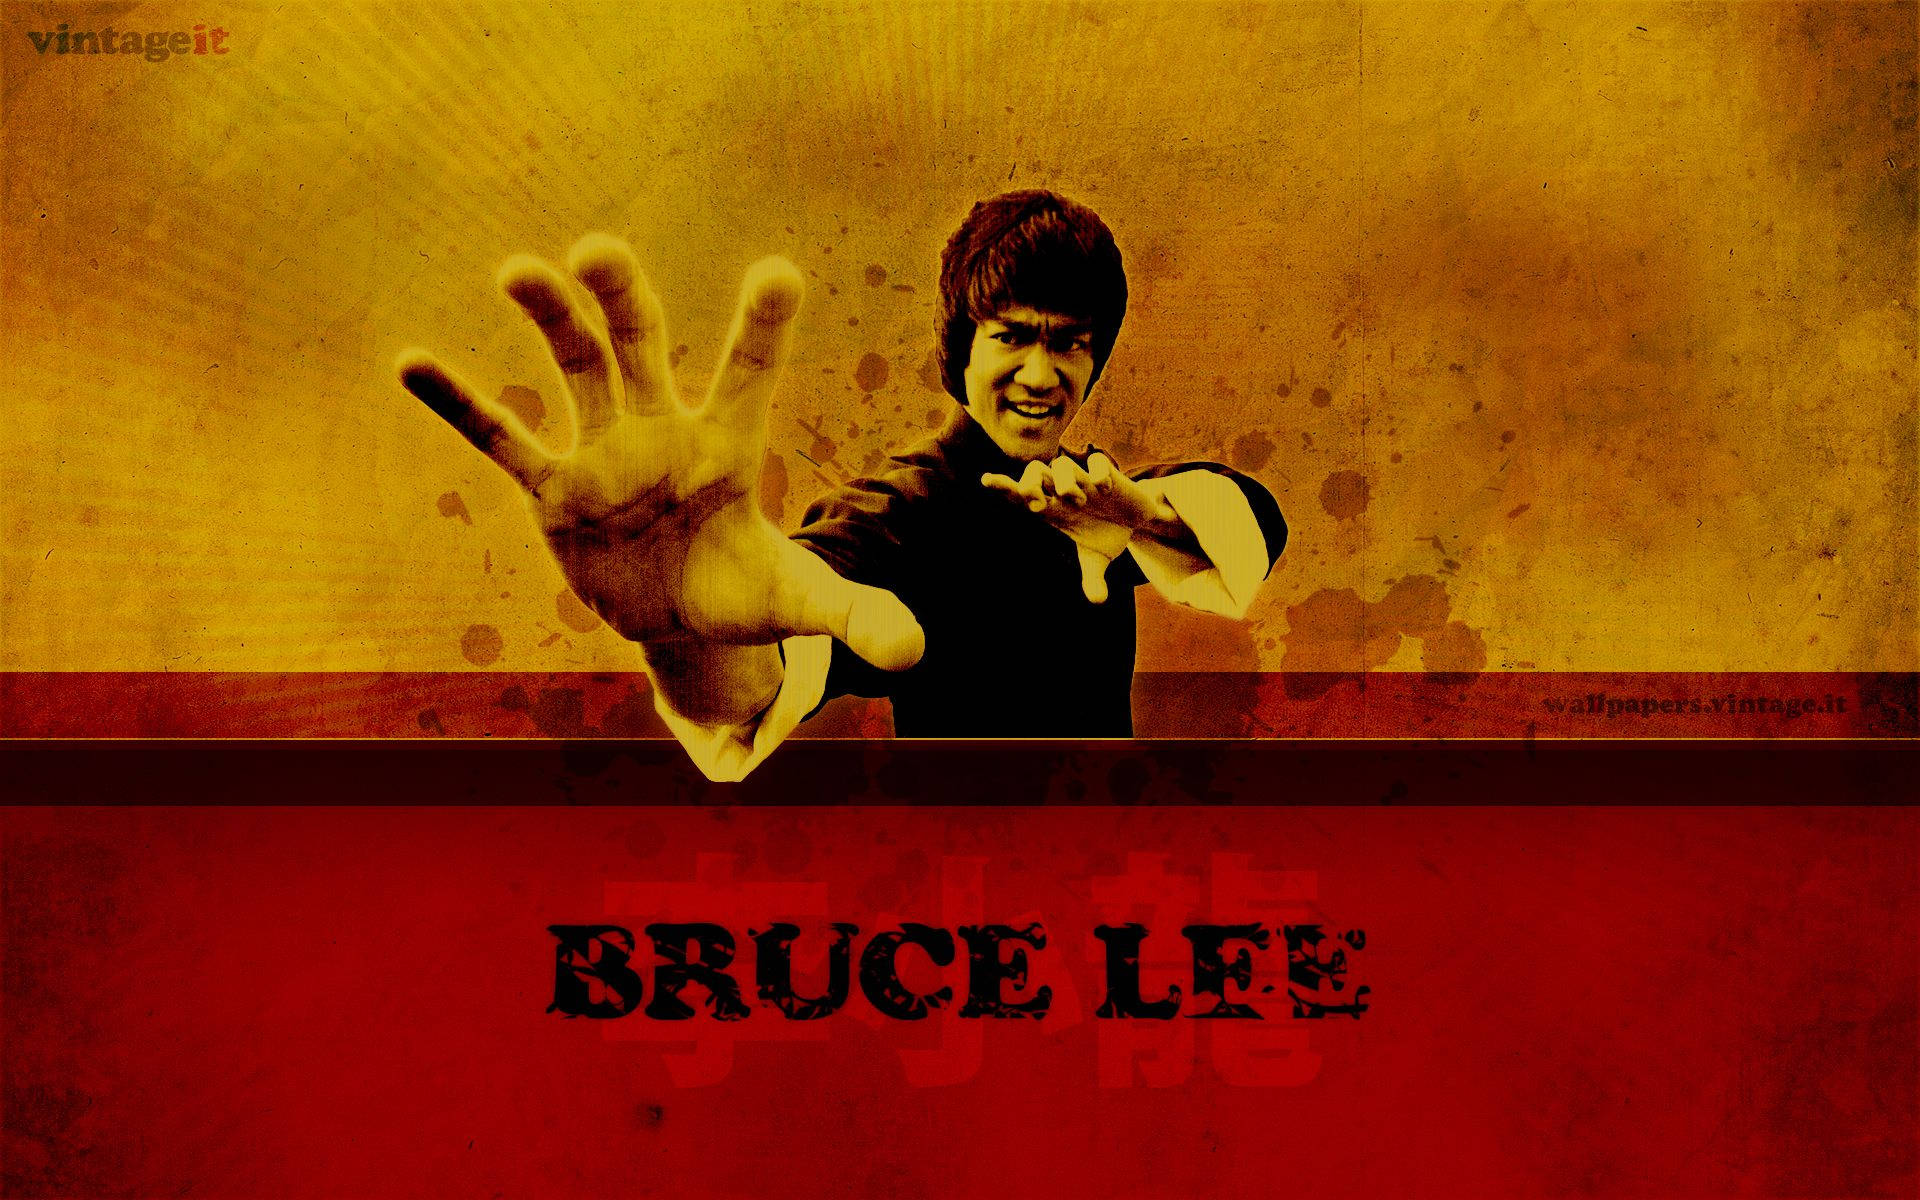 Bruce Lee Wallpaper - Free Desktop Hd Ipad Iphone Wallpaper